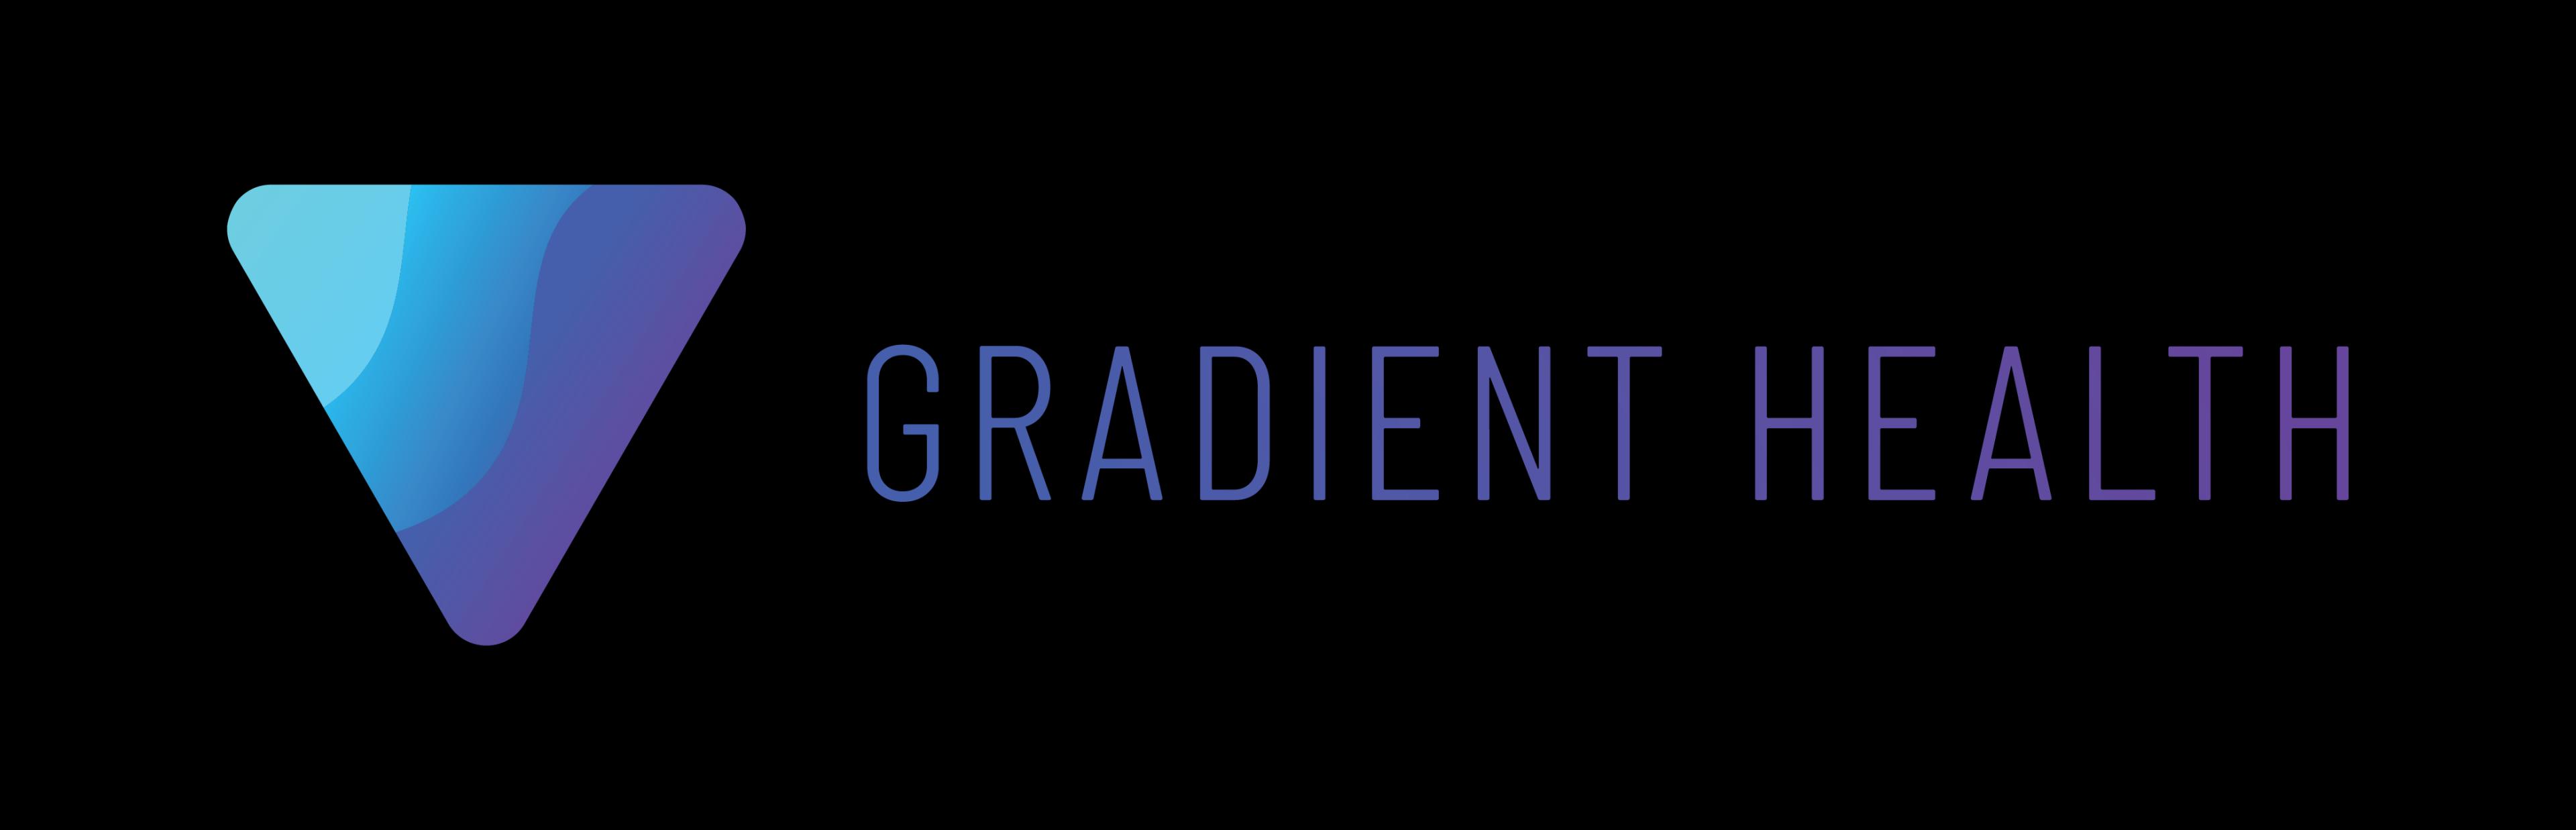 Gradient Health_logo